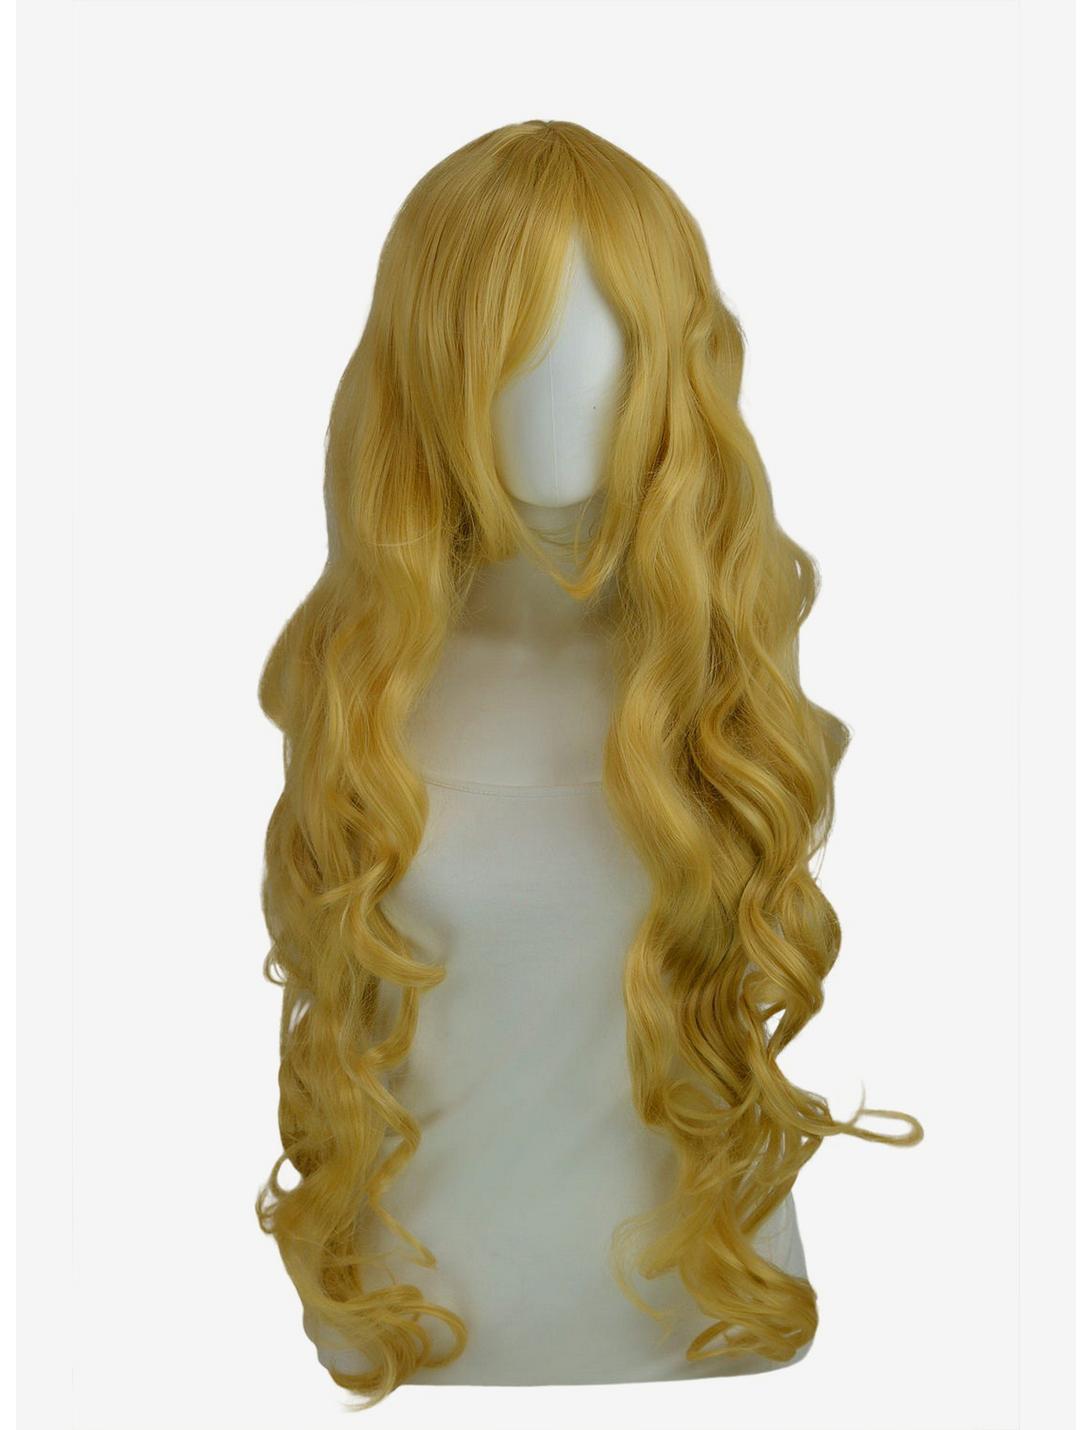 Epic Cosplay Hera Caramel Blonde Long Curly Wig, , hi-res